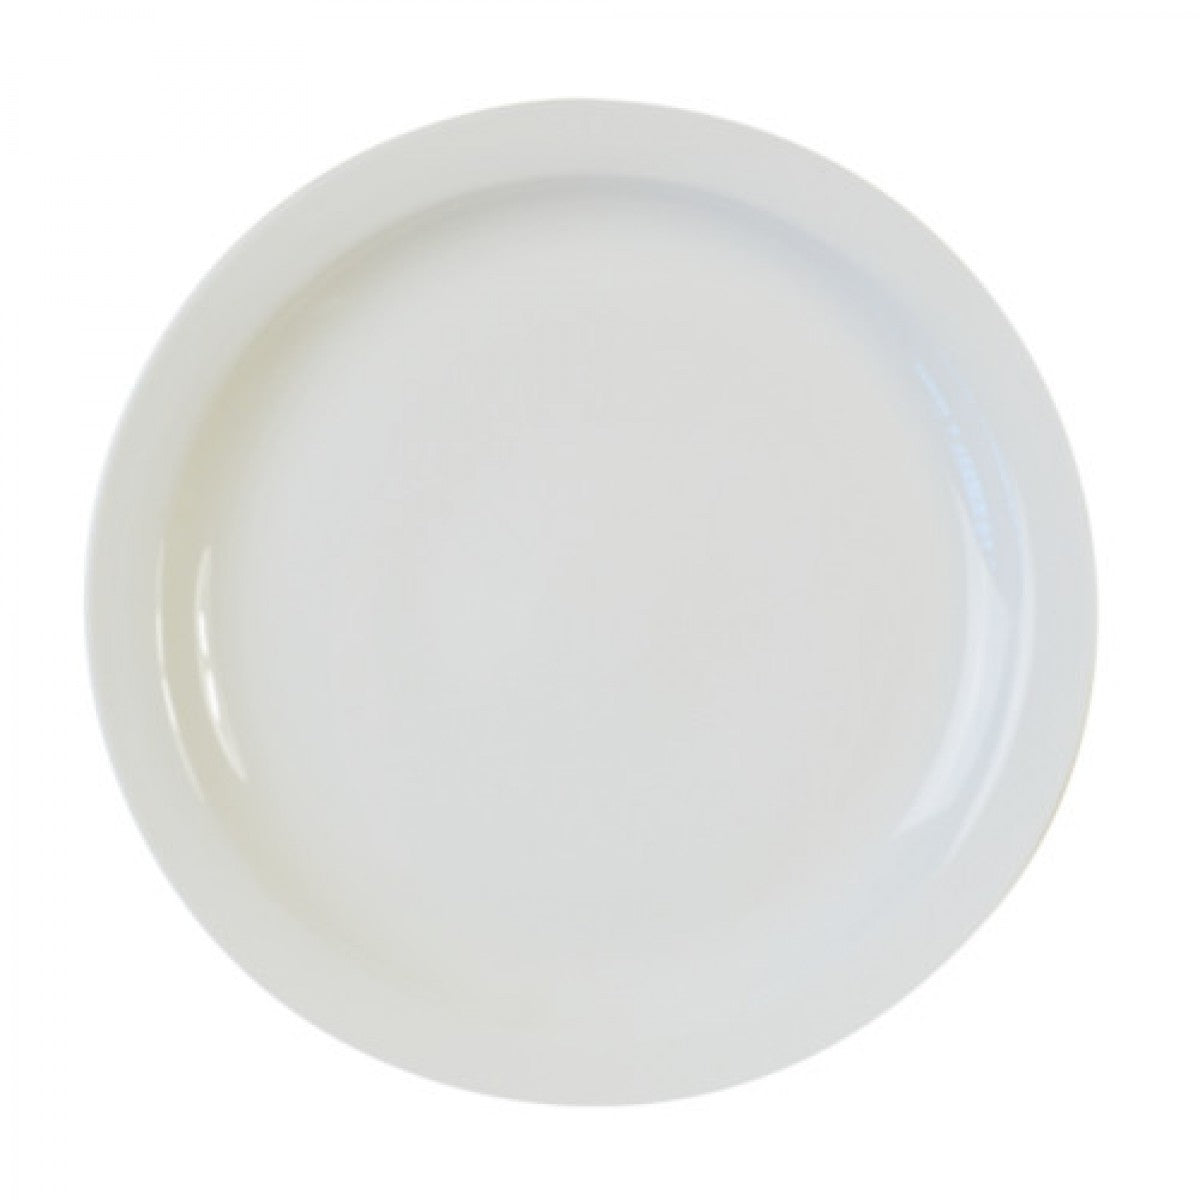 23cm White Porcelain Narrow Rim Food Salad Serving Plate